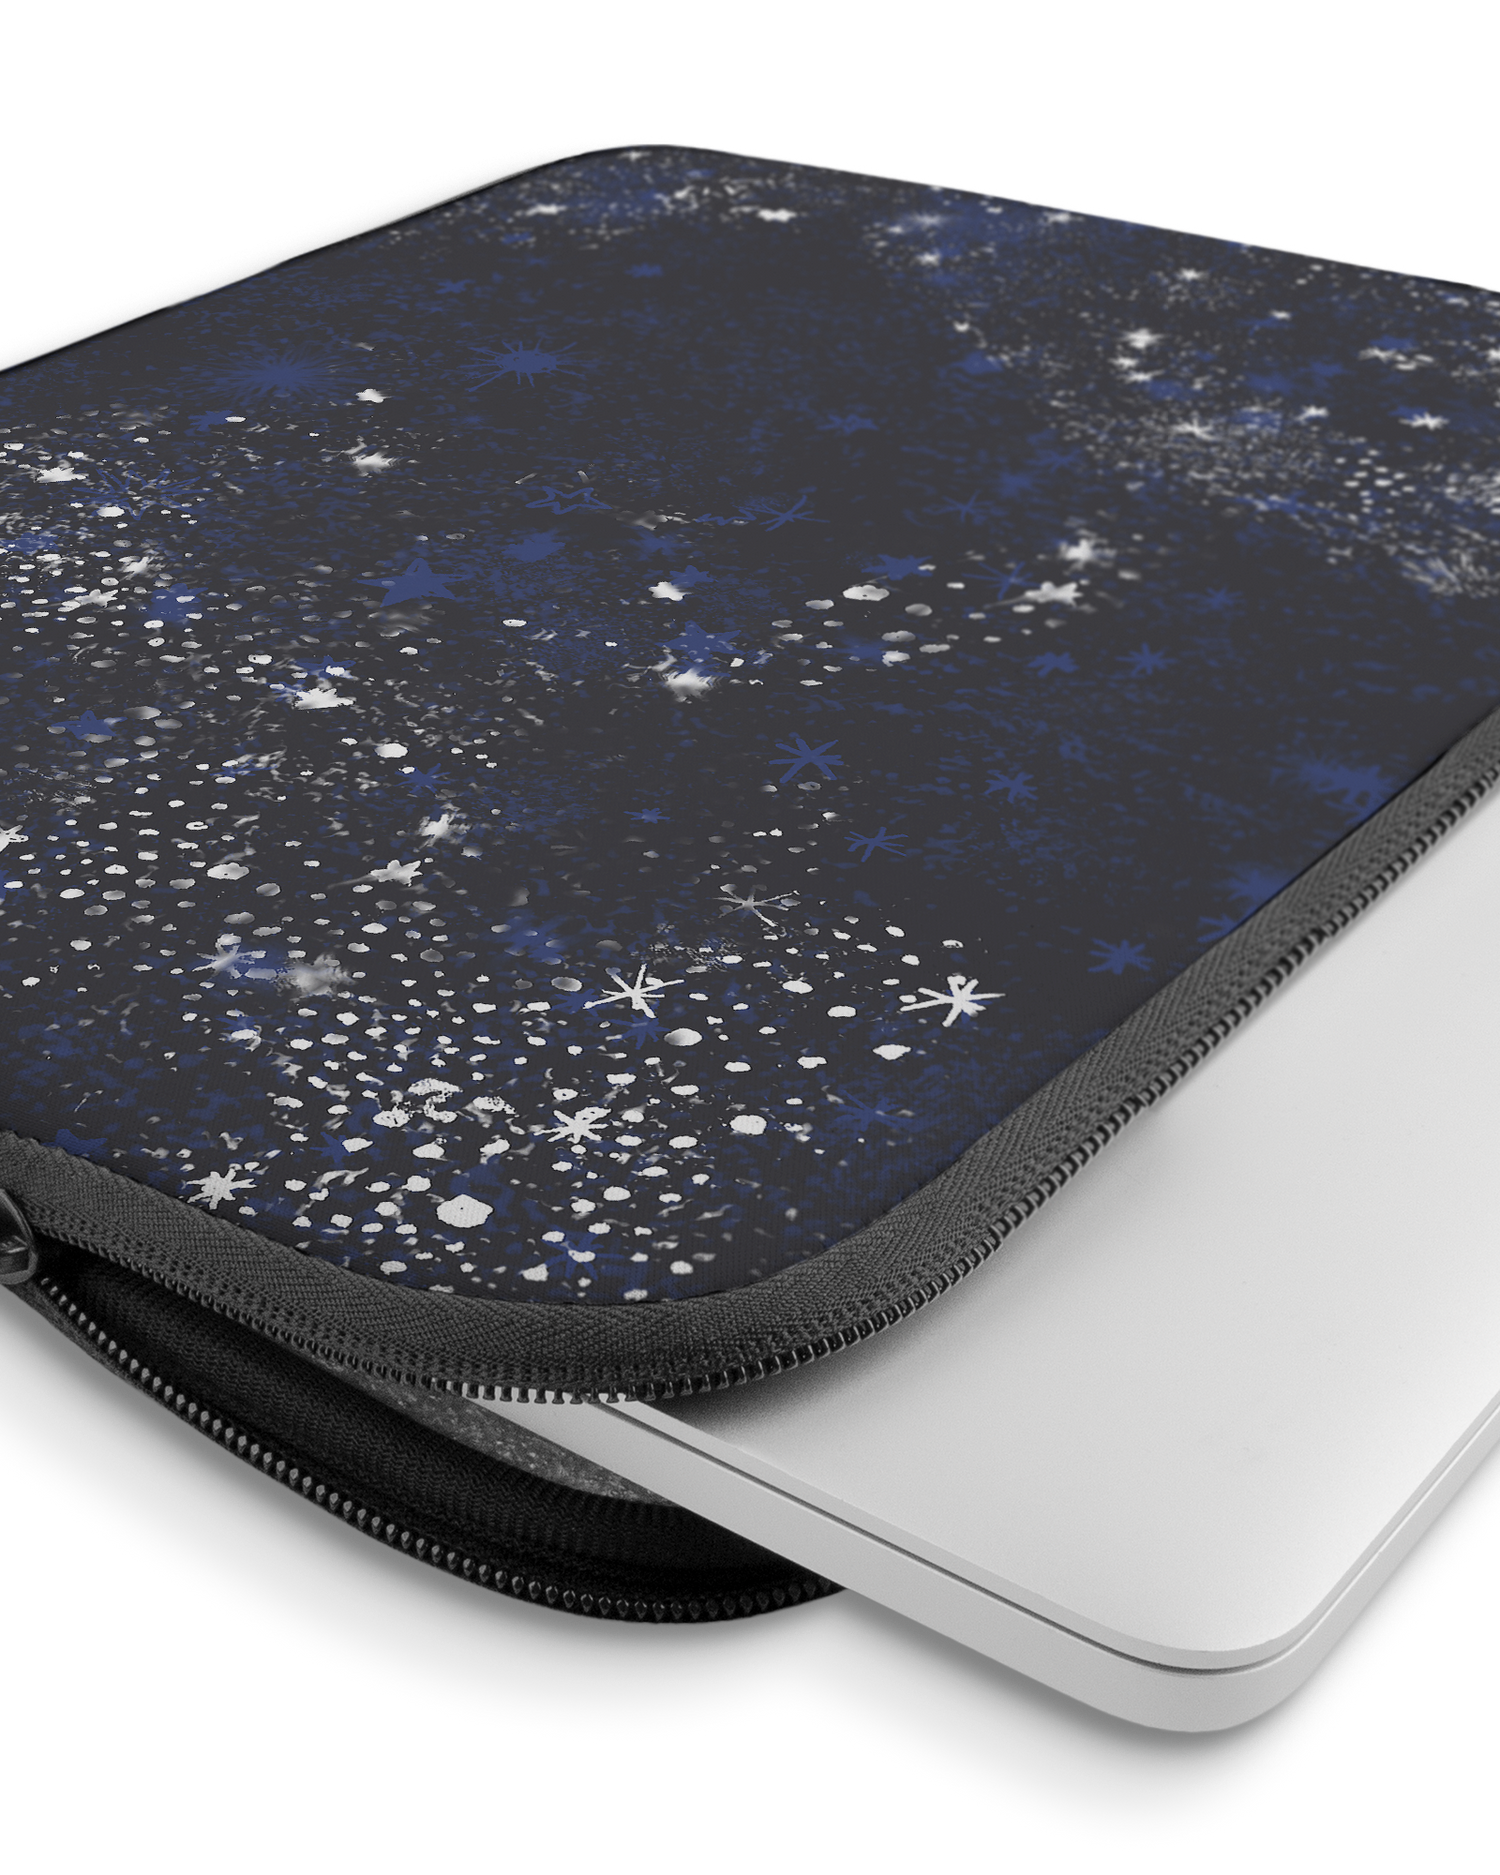 Starry Night Sky Laptop Case 15 inch with device inside